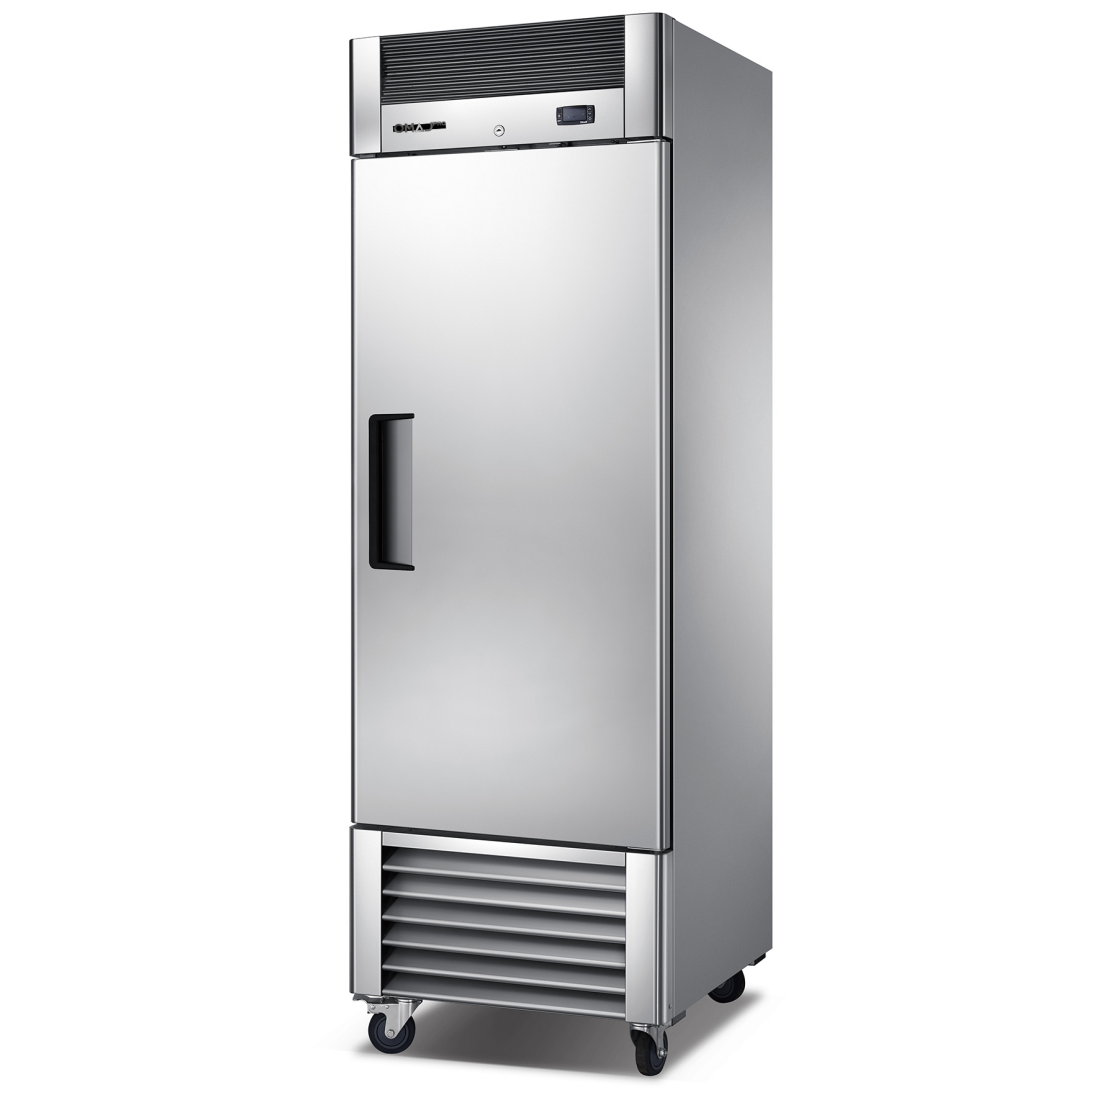 OMAJ PRO Stainless Steel One Door Freezer 610 Lt|mkayn|مكاين